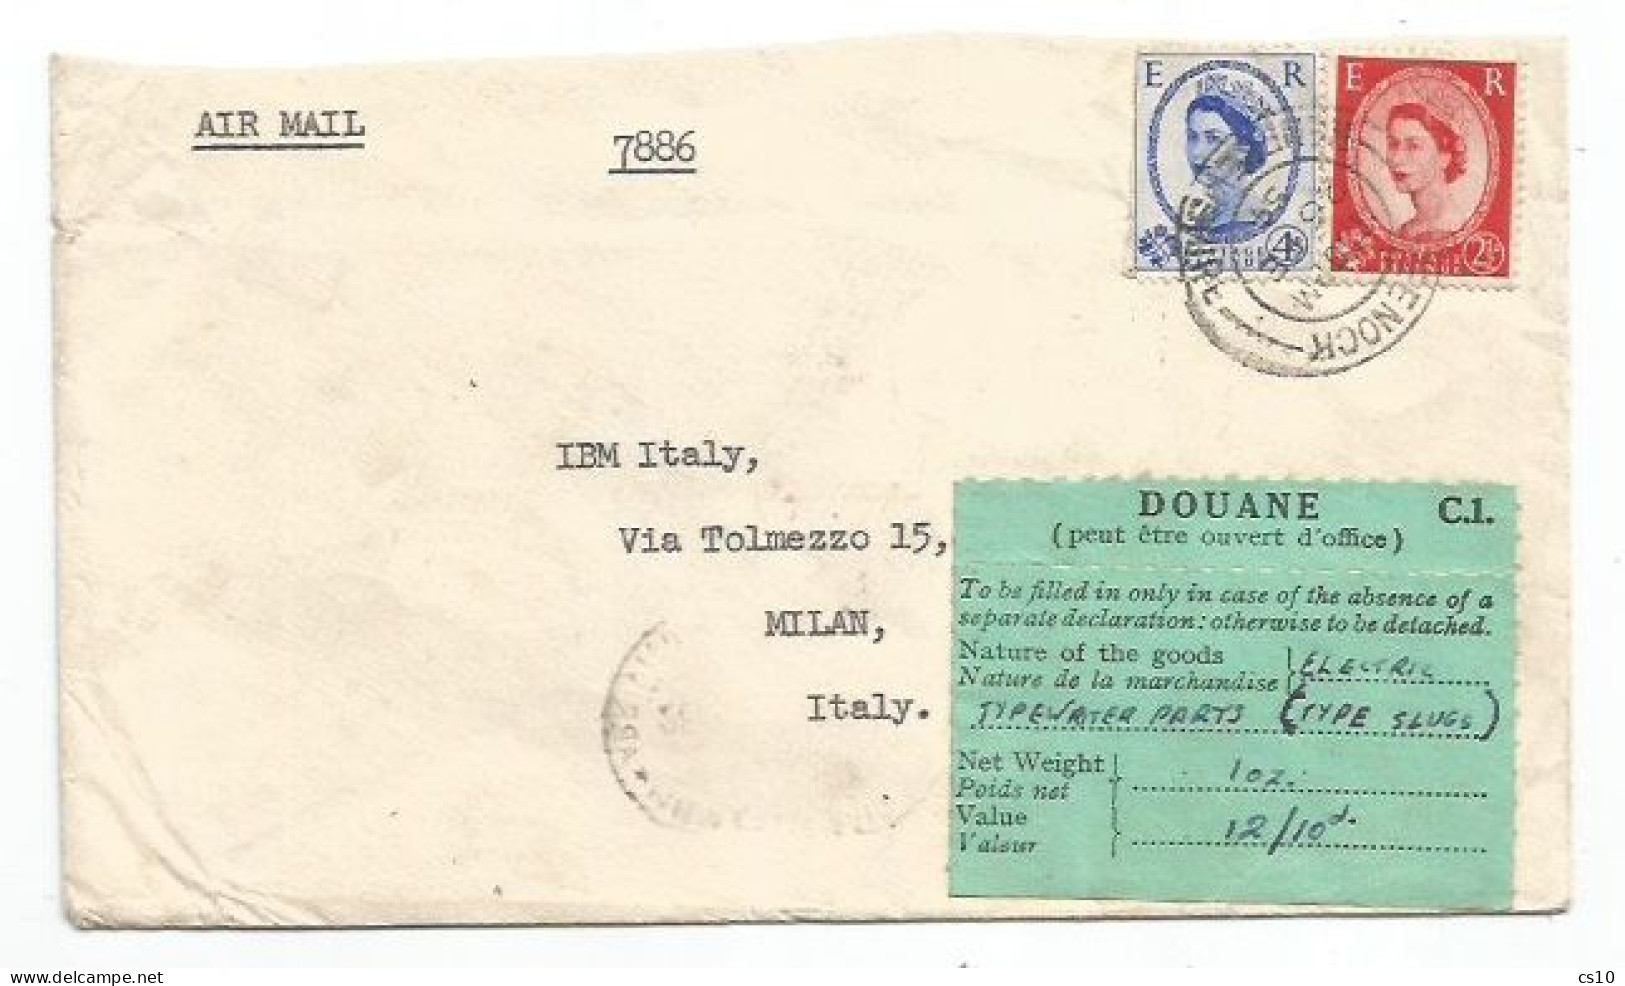 UK Britain Douane Customs Zoll Dogana Label C1 X Typewriter Parts Airmail CV UK 1954 To Italy C/o IBM Corporation - Postmark Collection